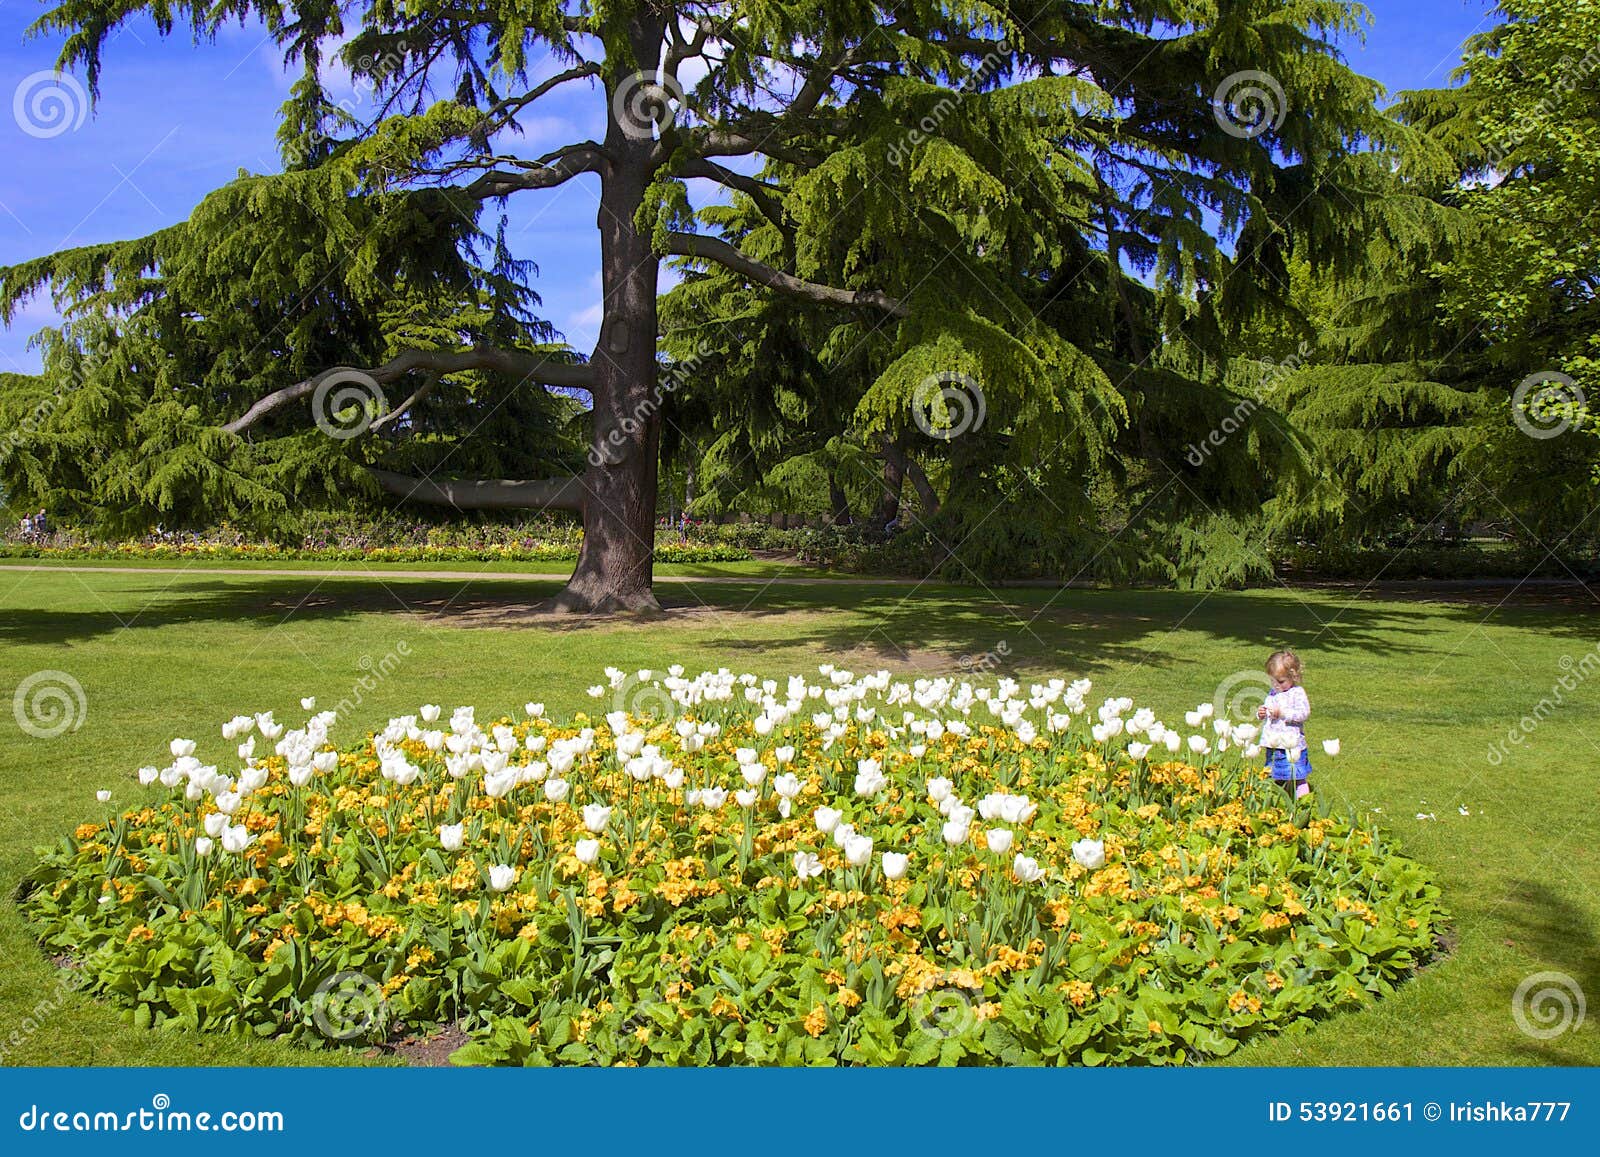 flower garden in greenwich park, london editorial photo - image of